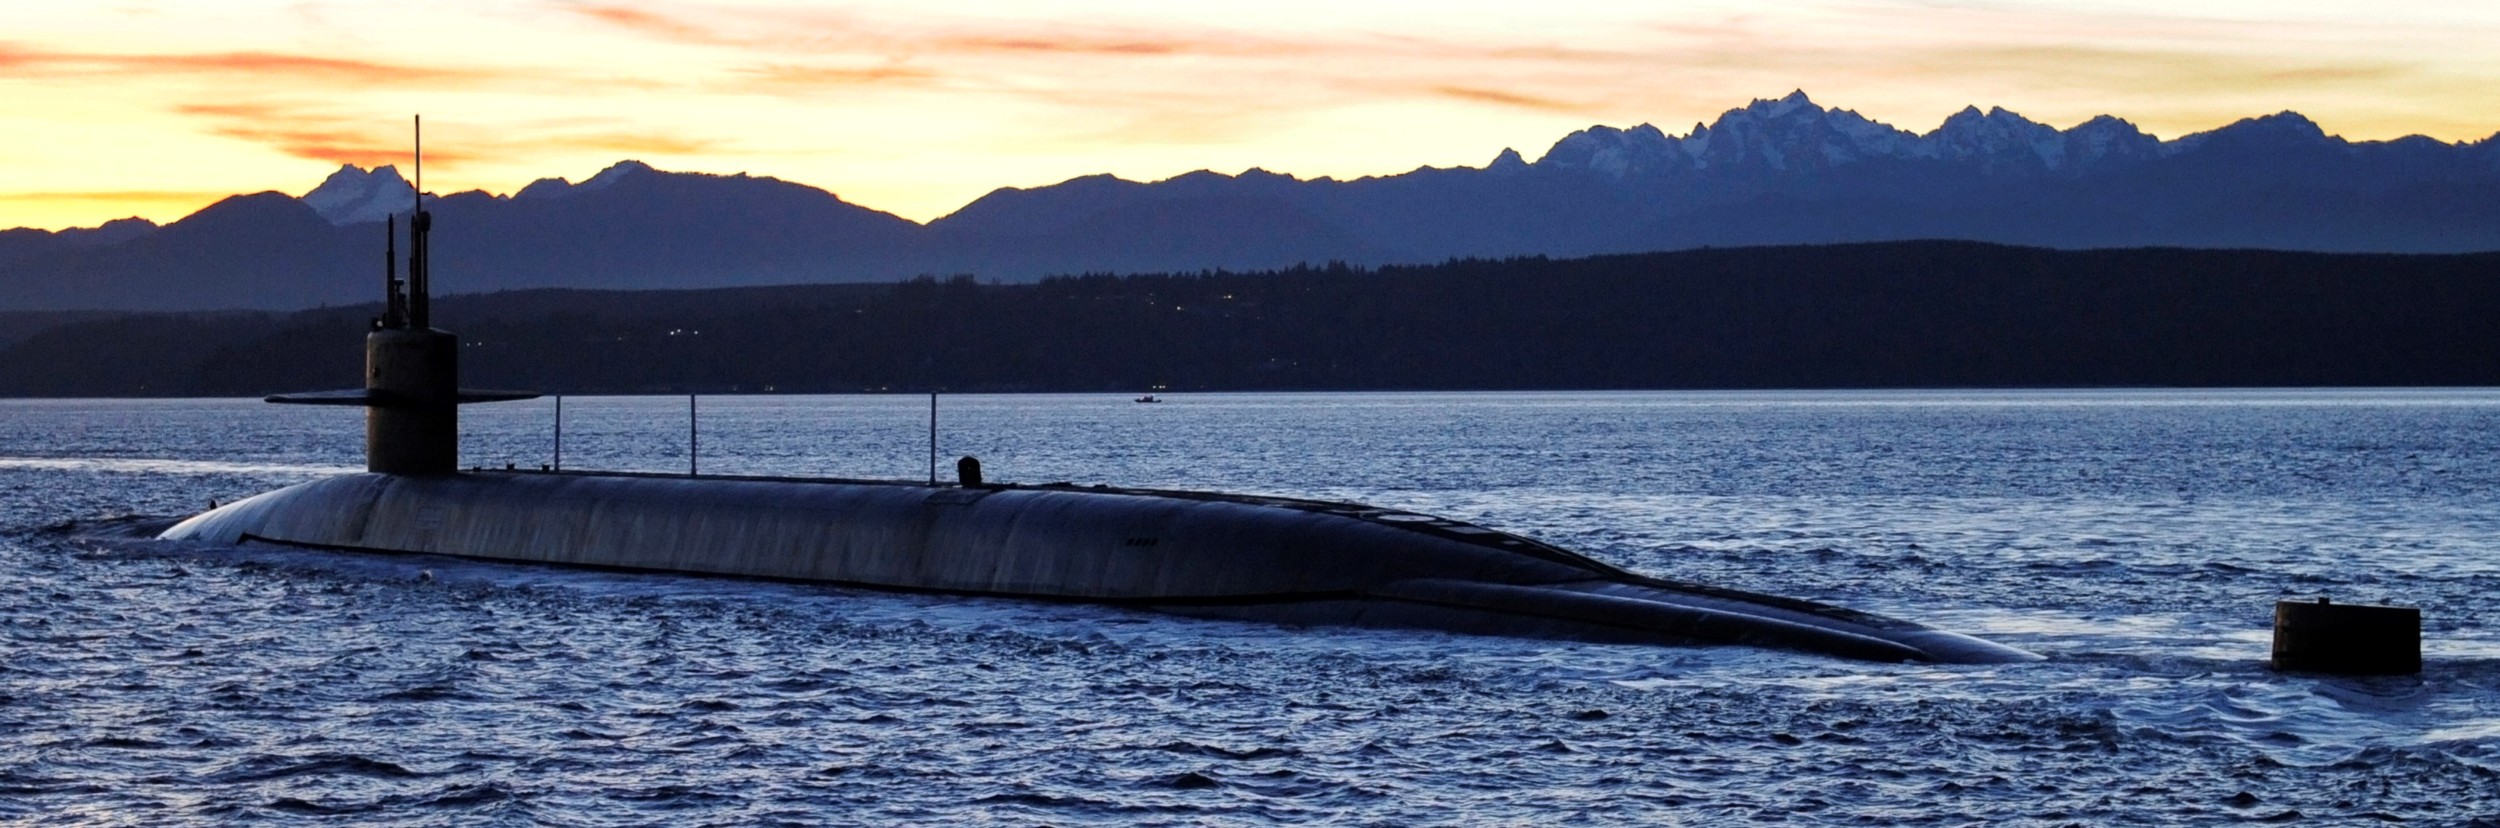 ssbn-733 uss nevada ohio class ballistic missile submarine 2015 05 puget sound